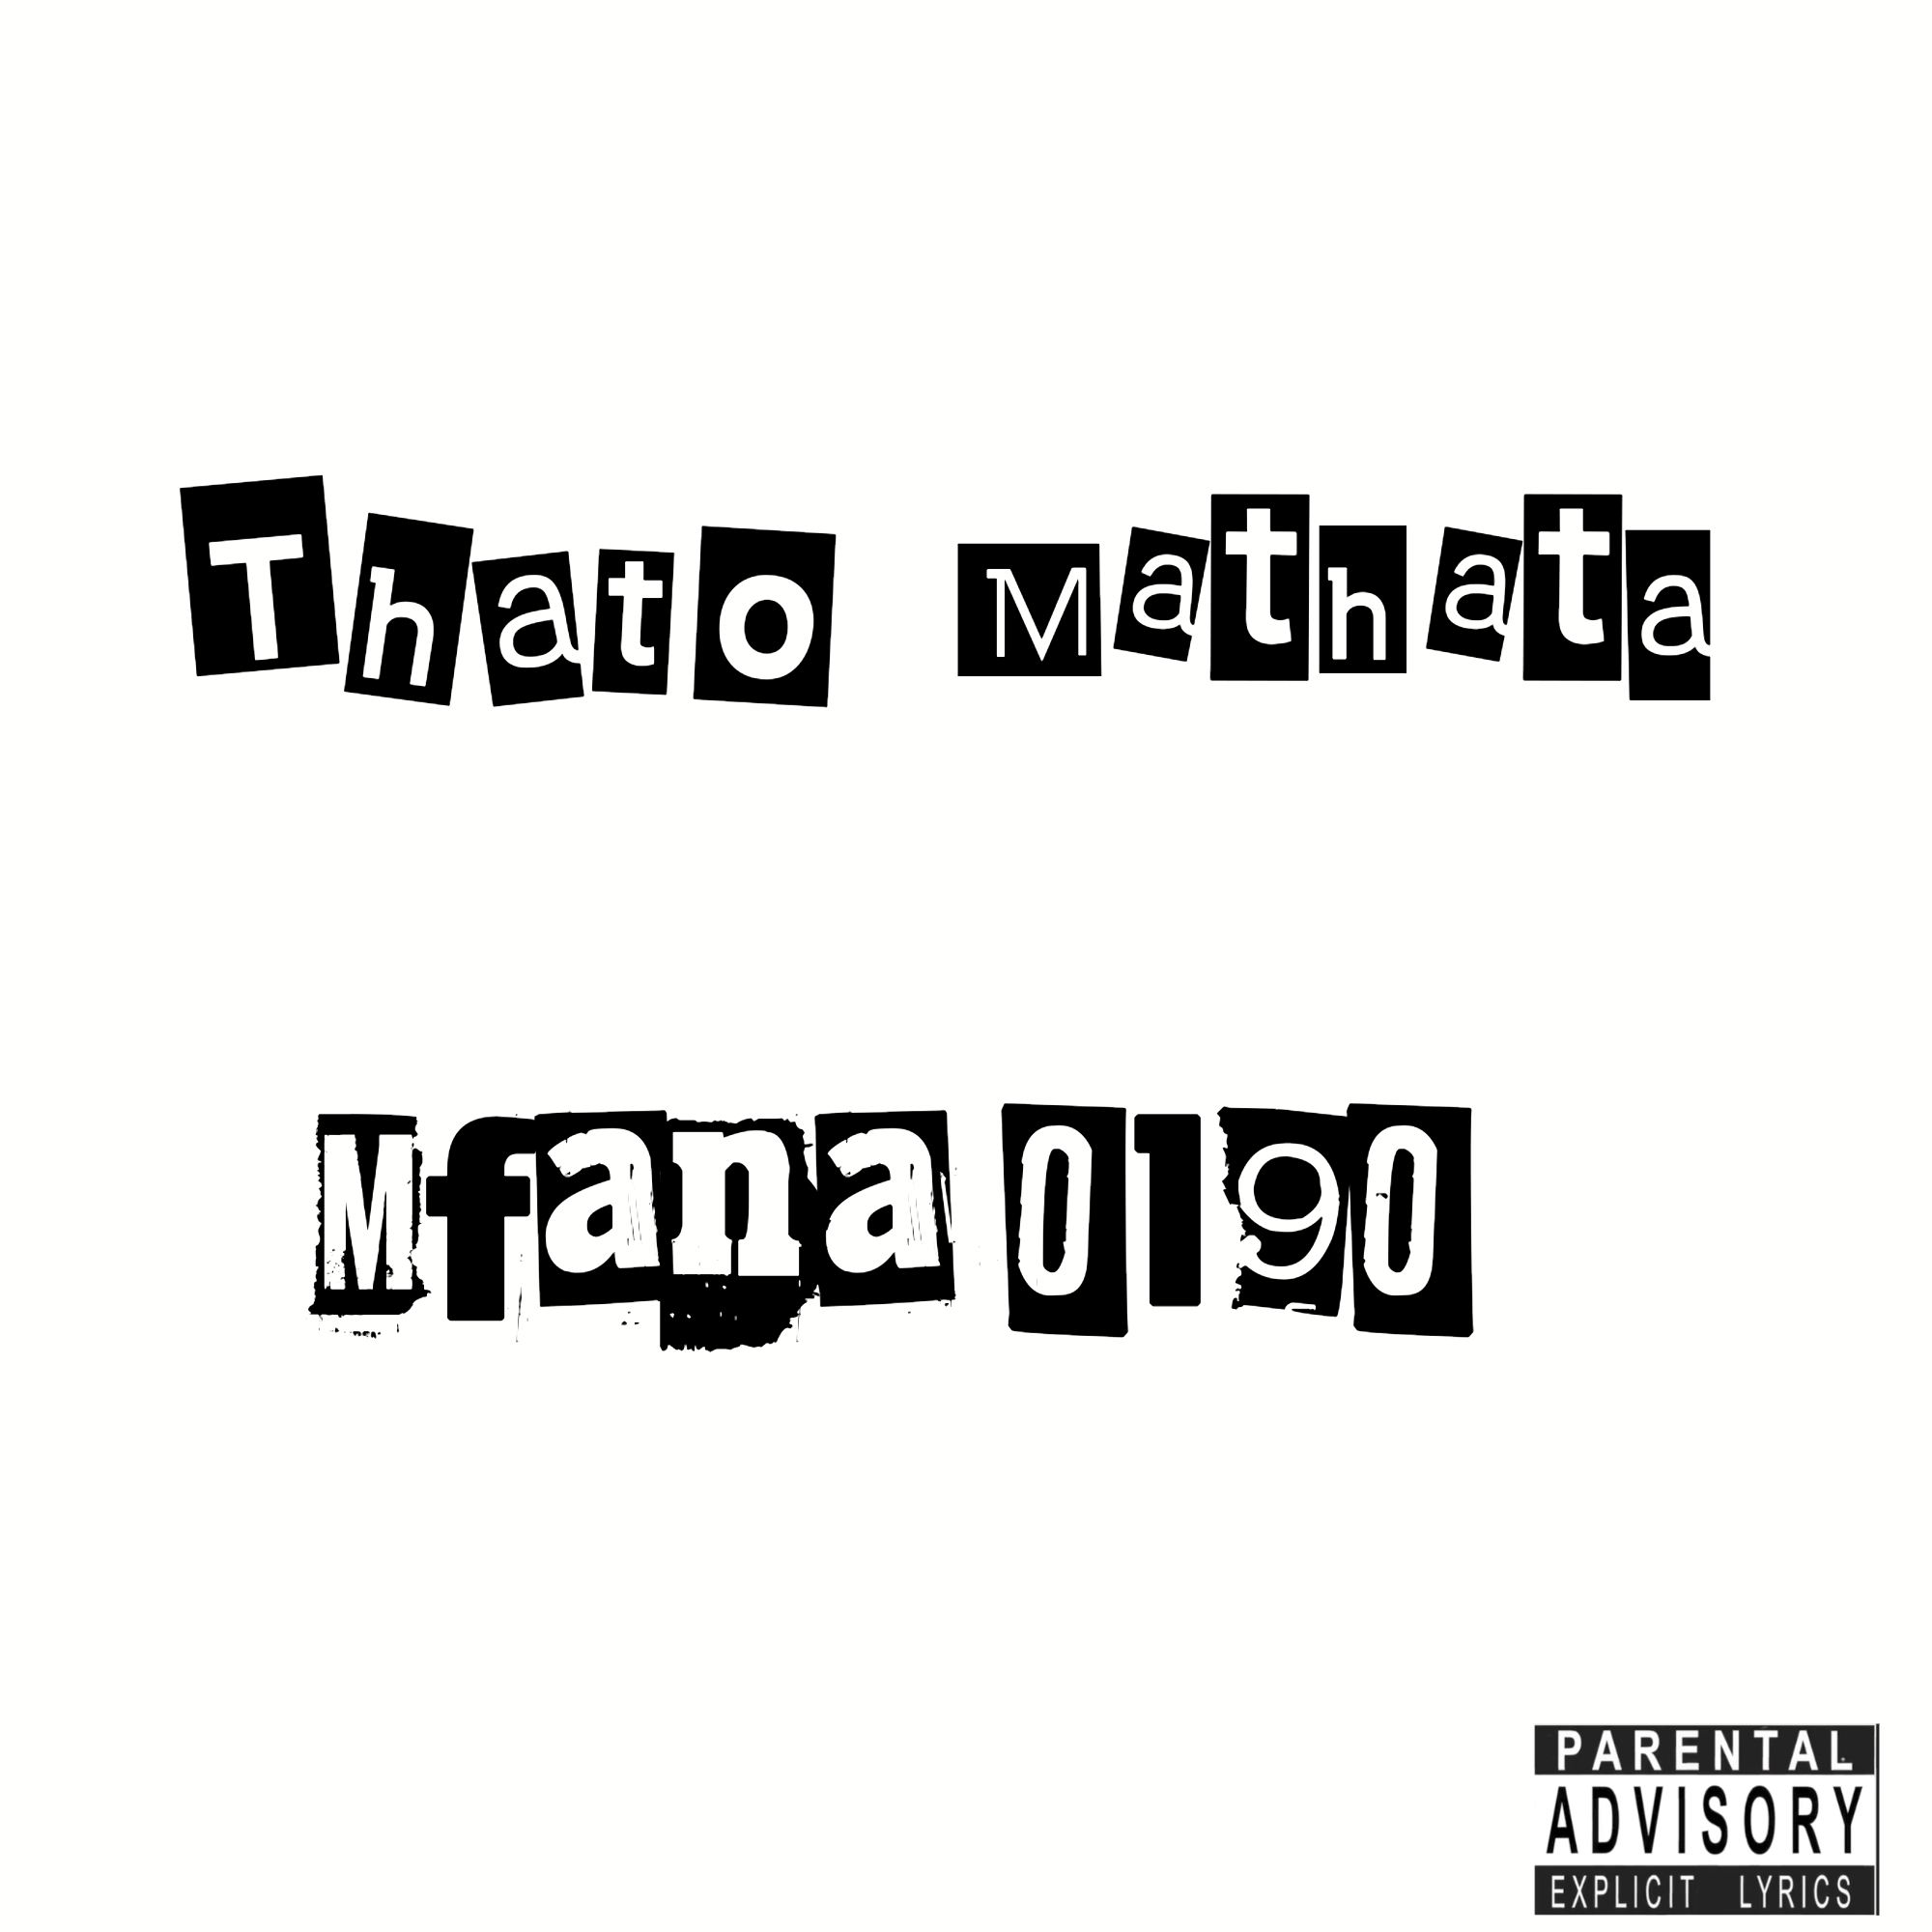 Mfana 0190 - Thato Mathata